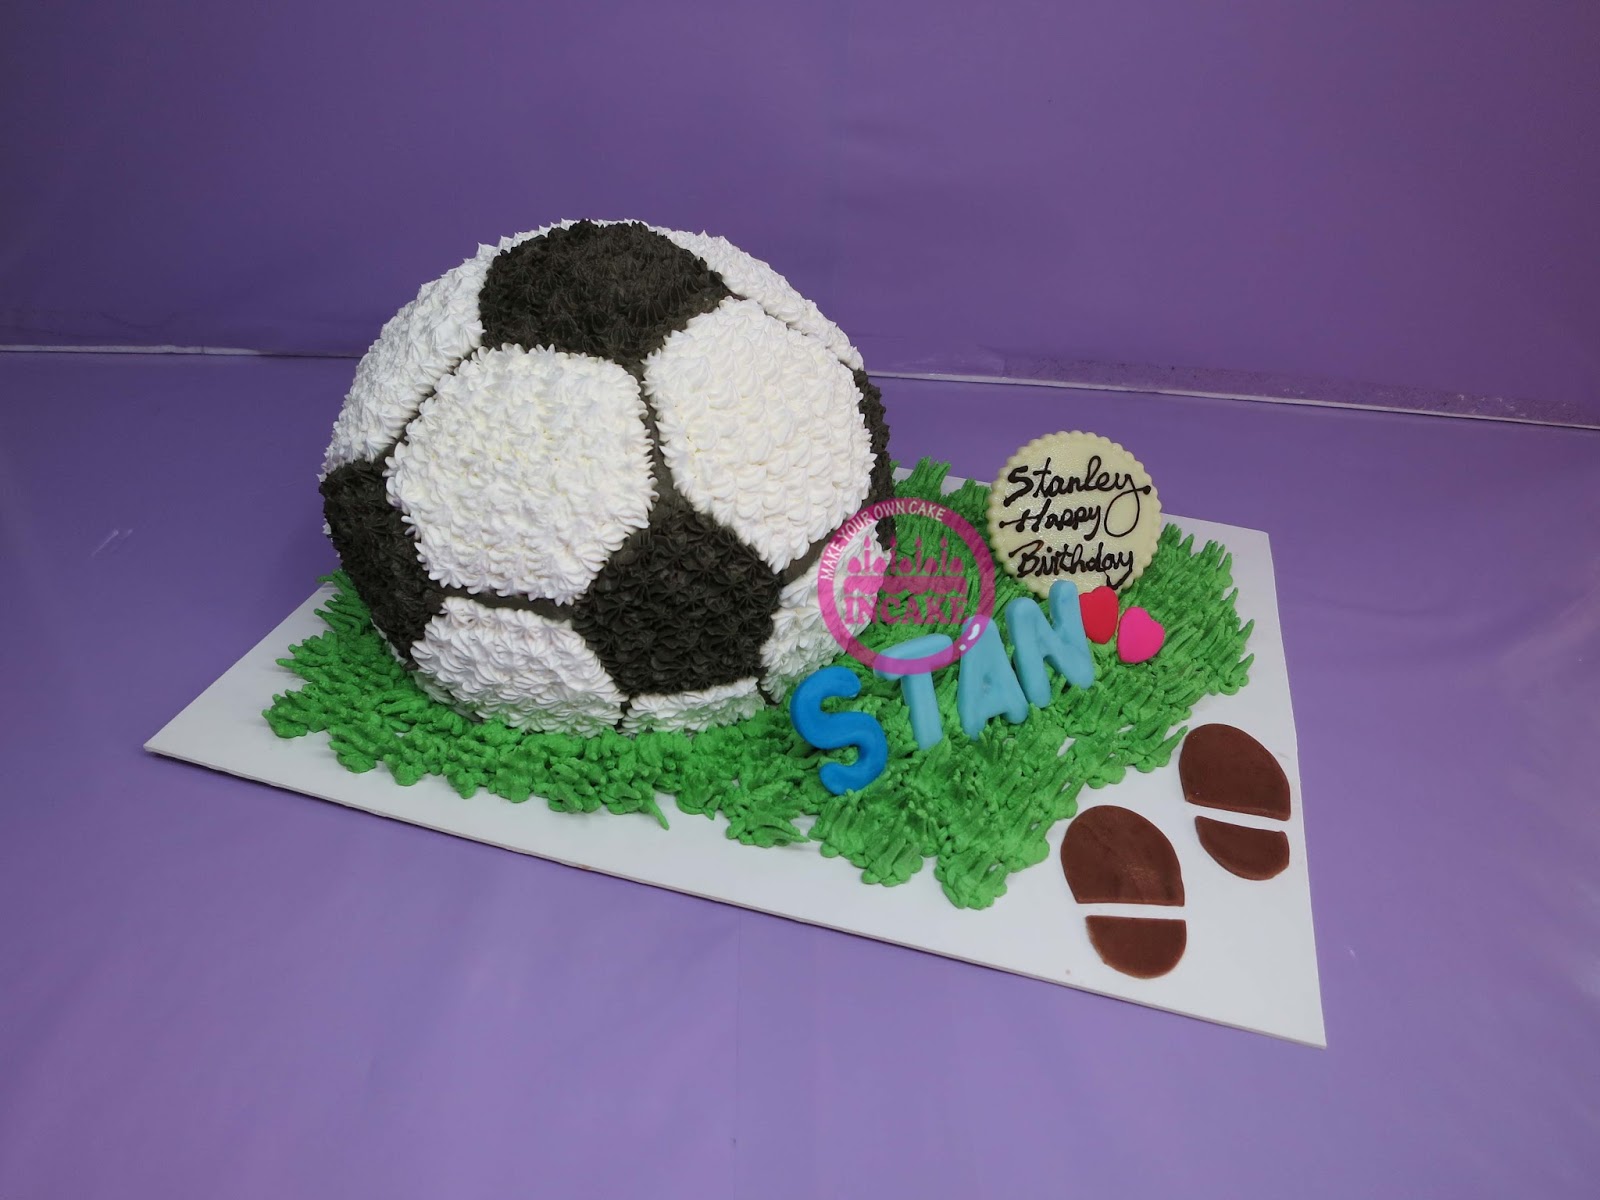 4pcs足球翻糖蛋糕印花模 球场球员世界杯主图蛋糕装饰 OPP简装-阿里巴巴